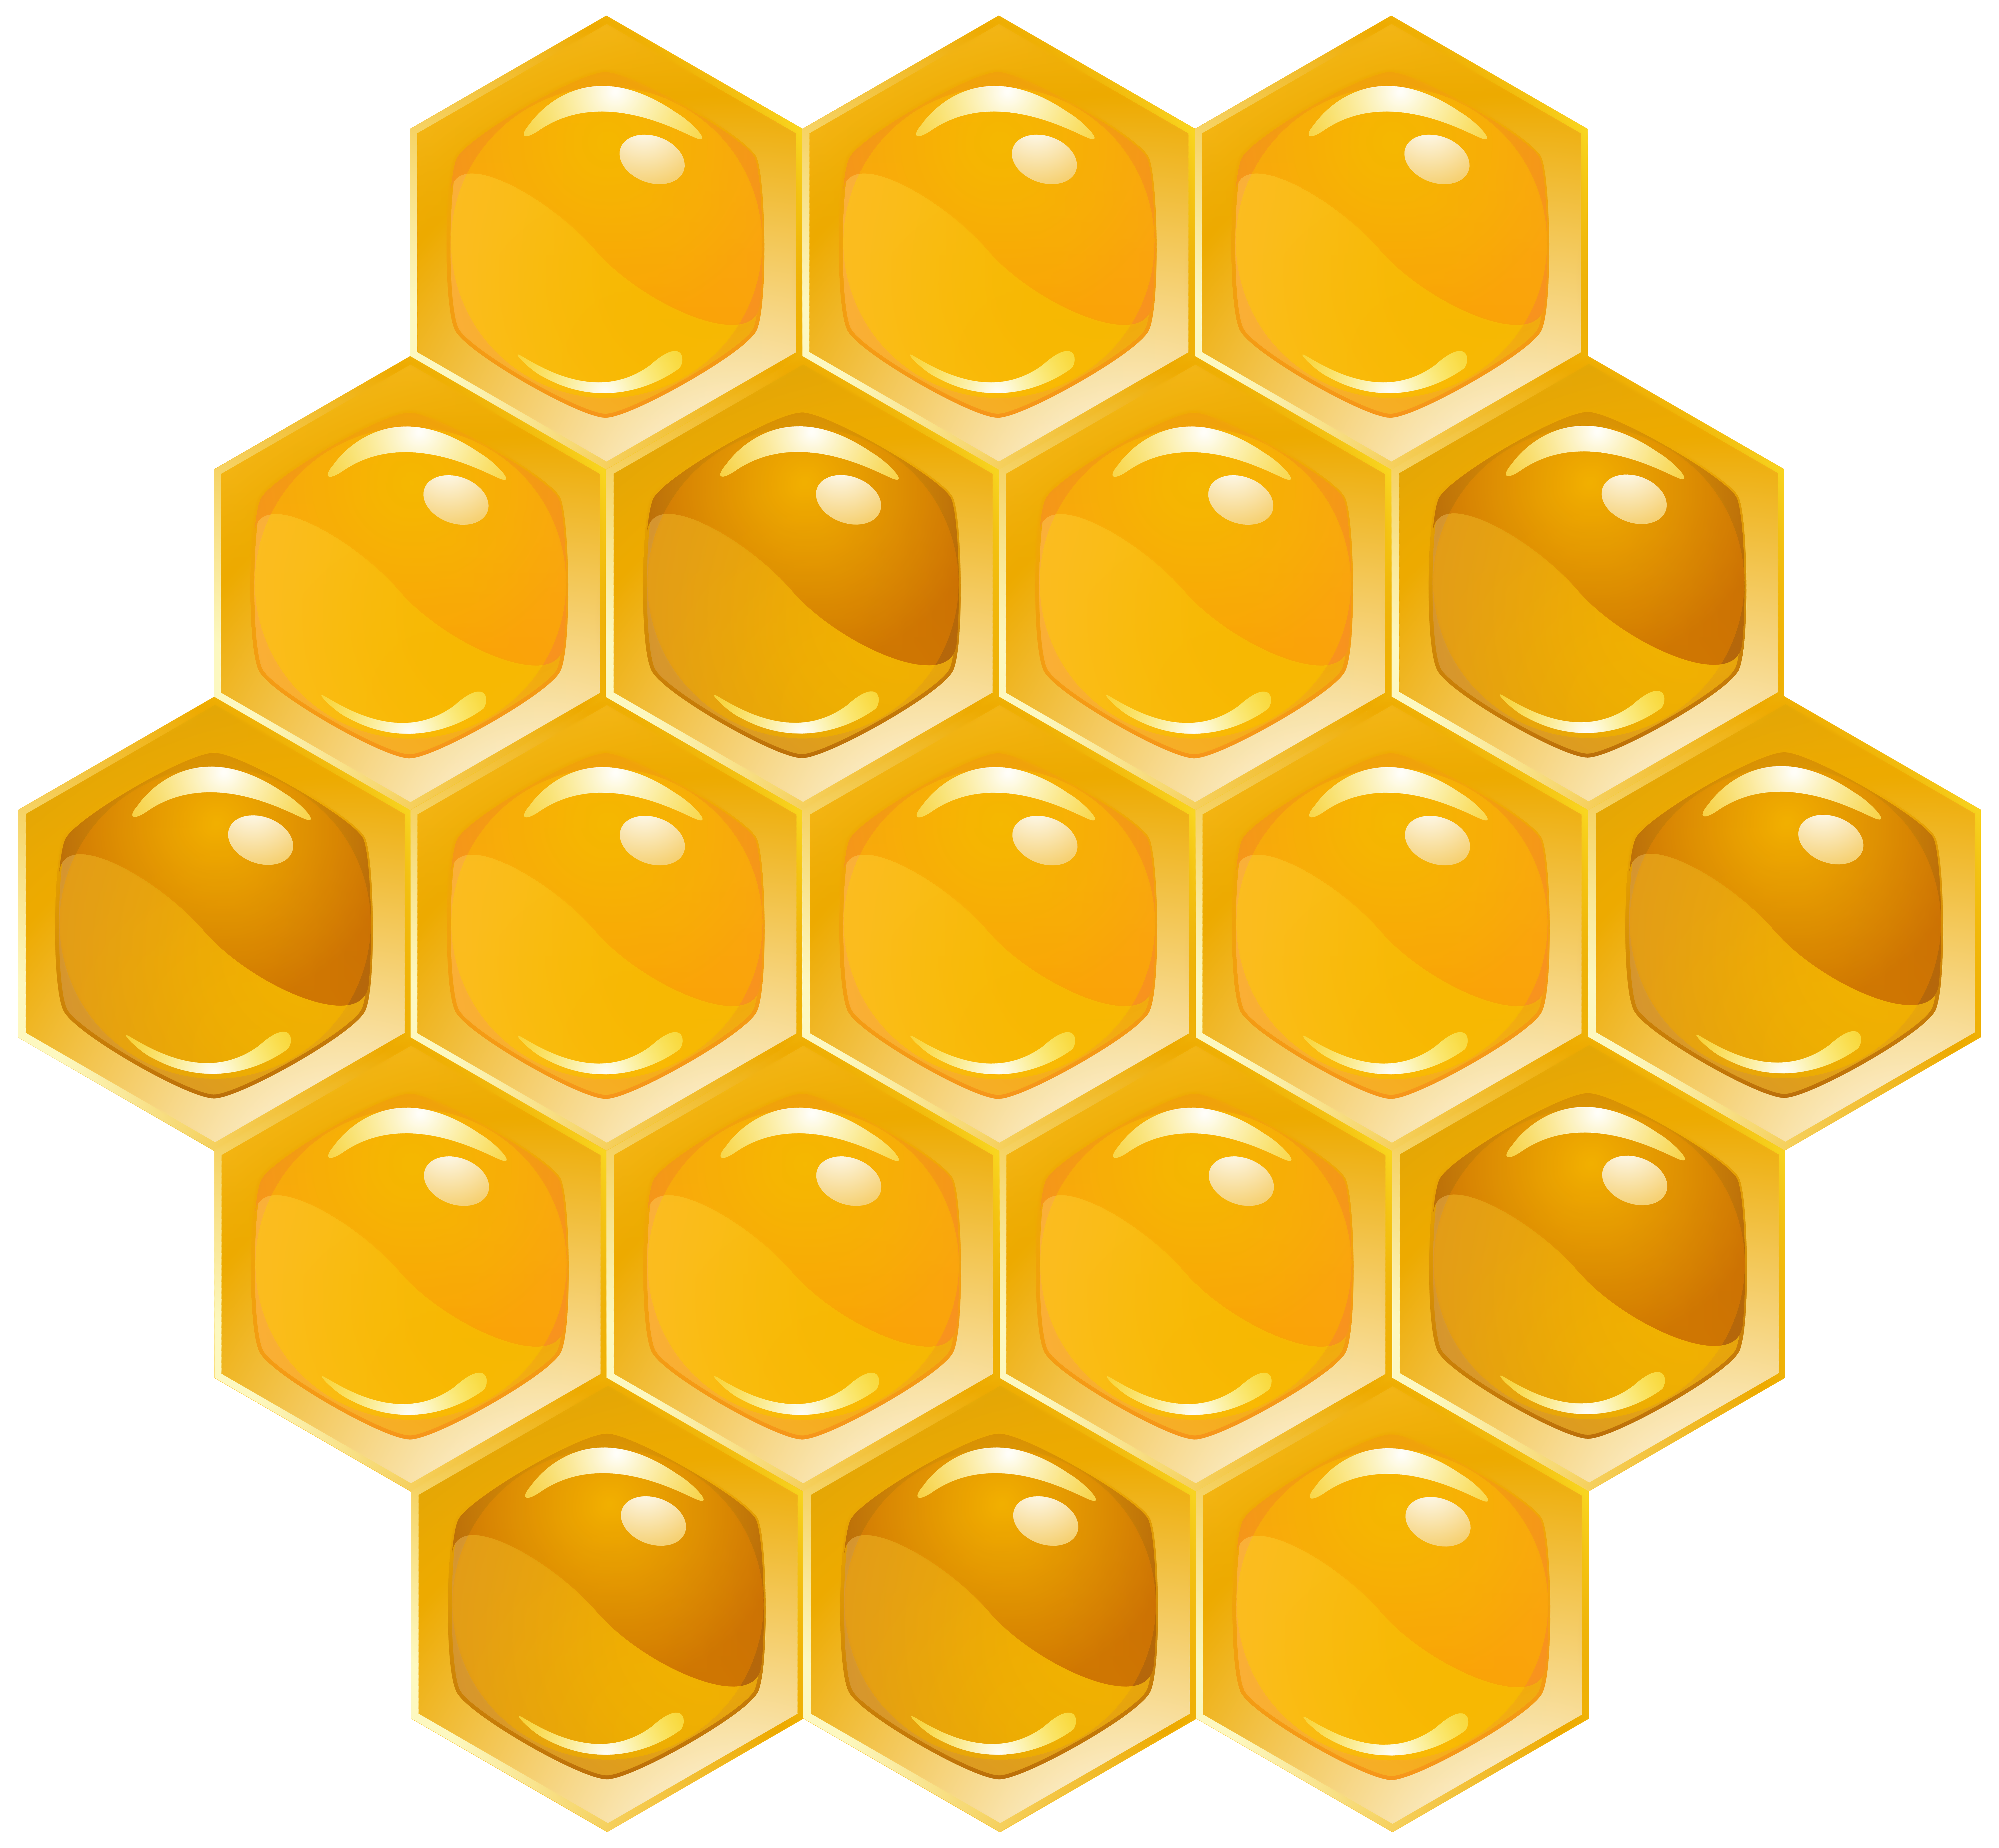 Honeycomb Photos, Download The BEST Free Honeycomb Stock Photos